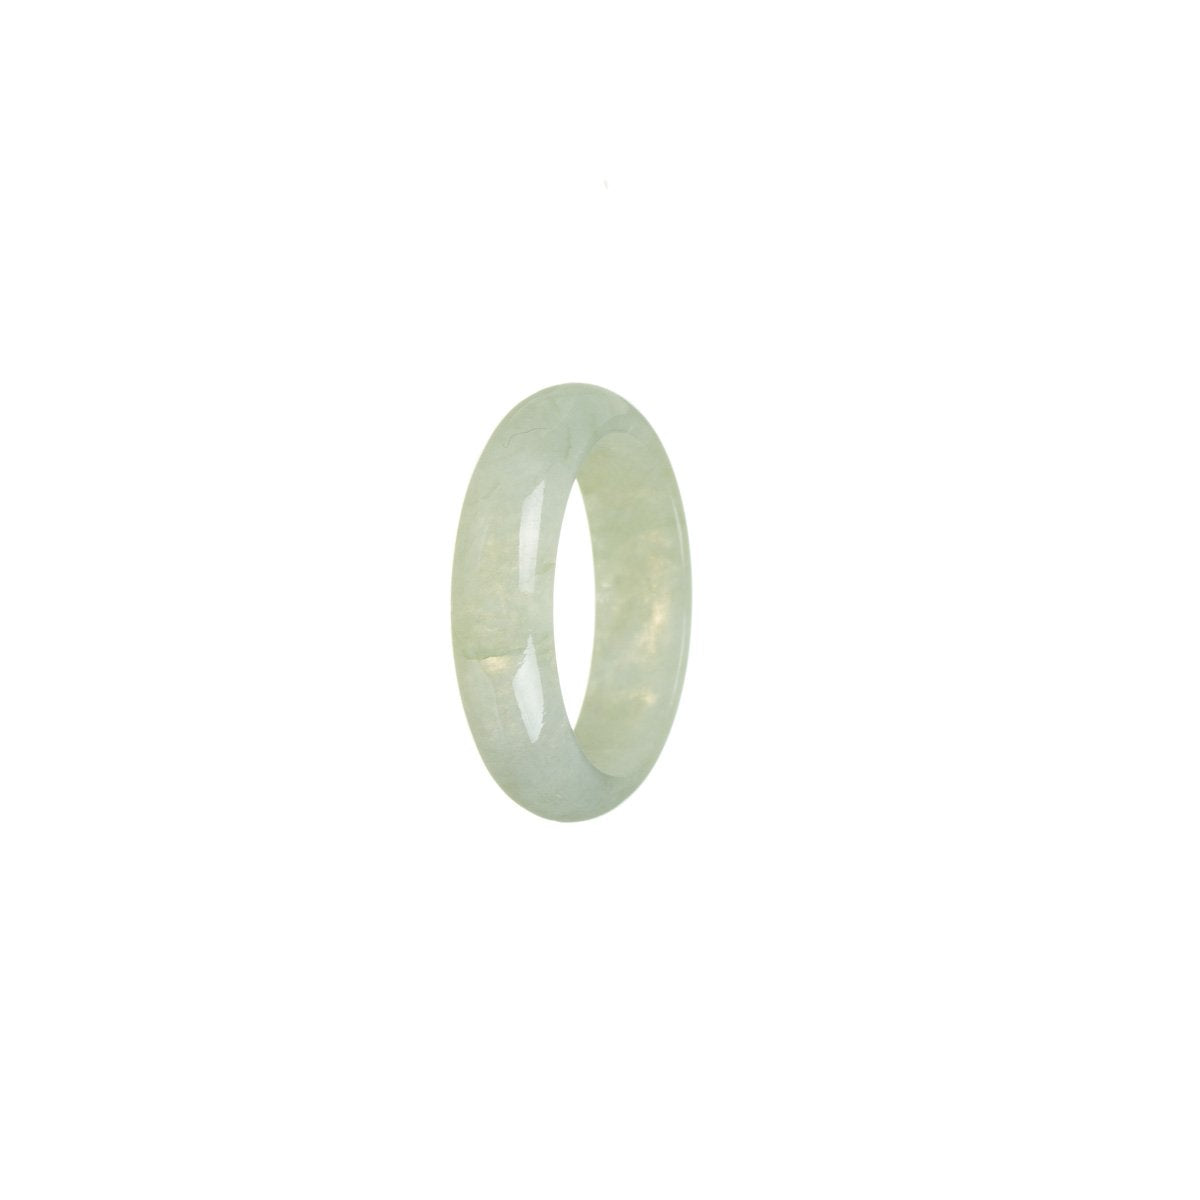 Certified Light Green Burma Jade Ring - Size S 1/2